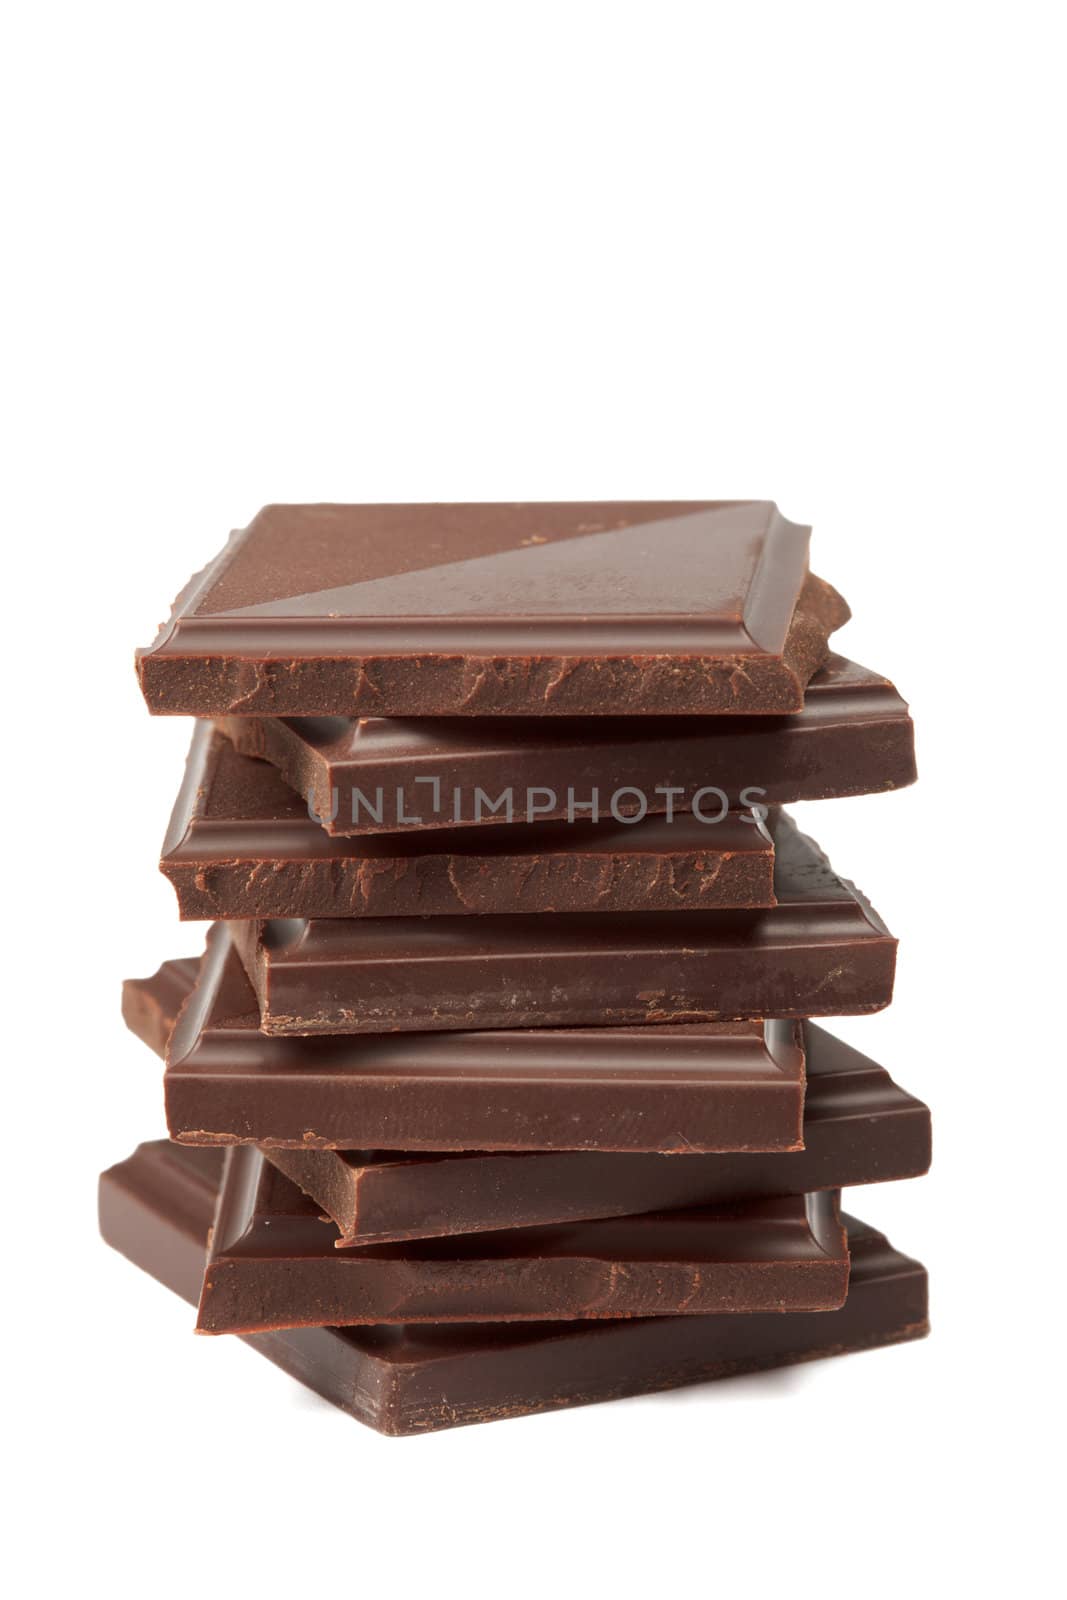 Stack of dark chocolate isolated on white